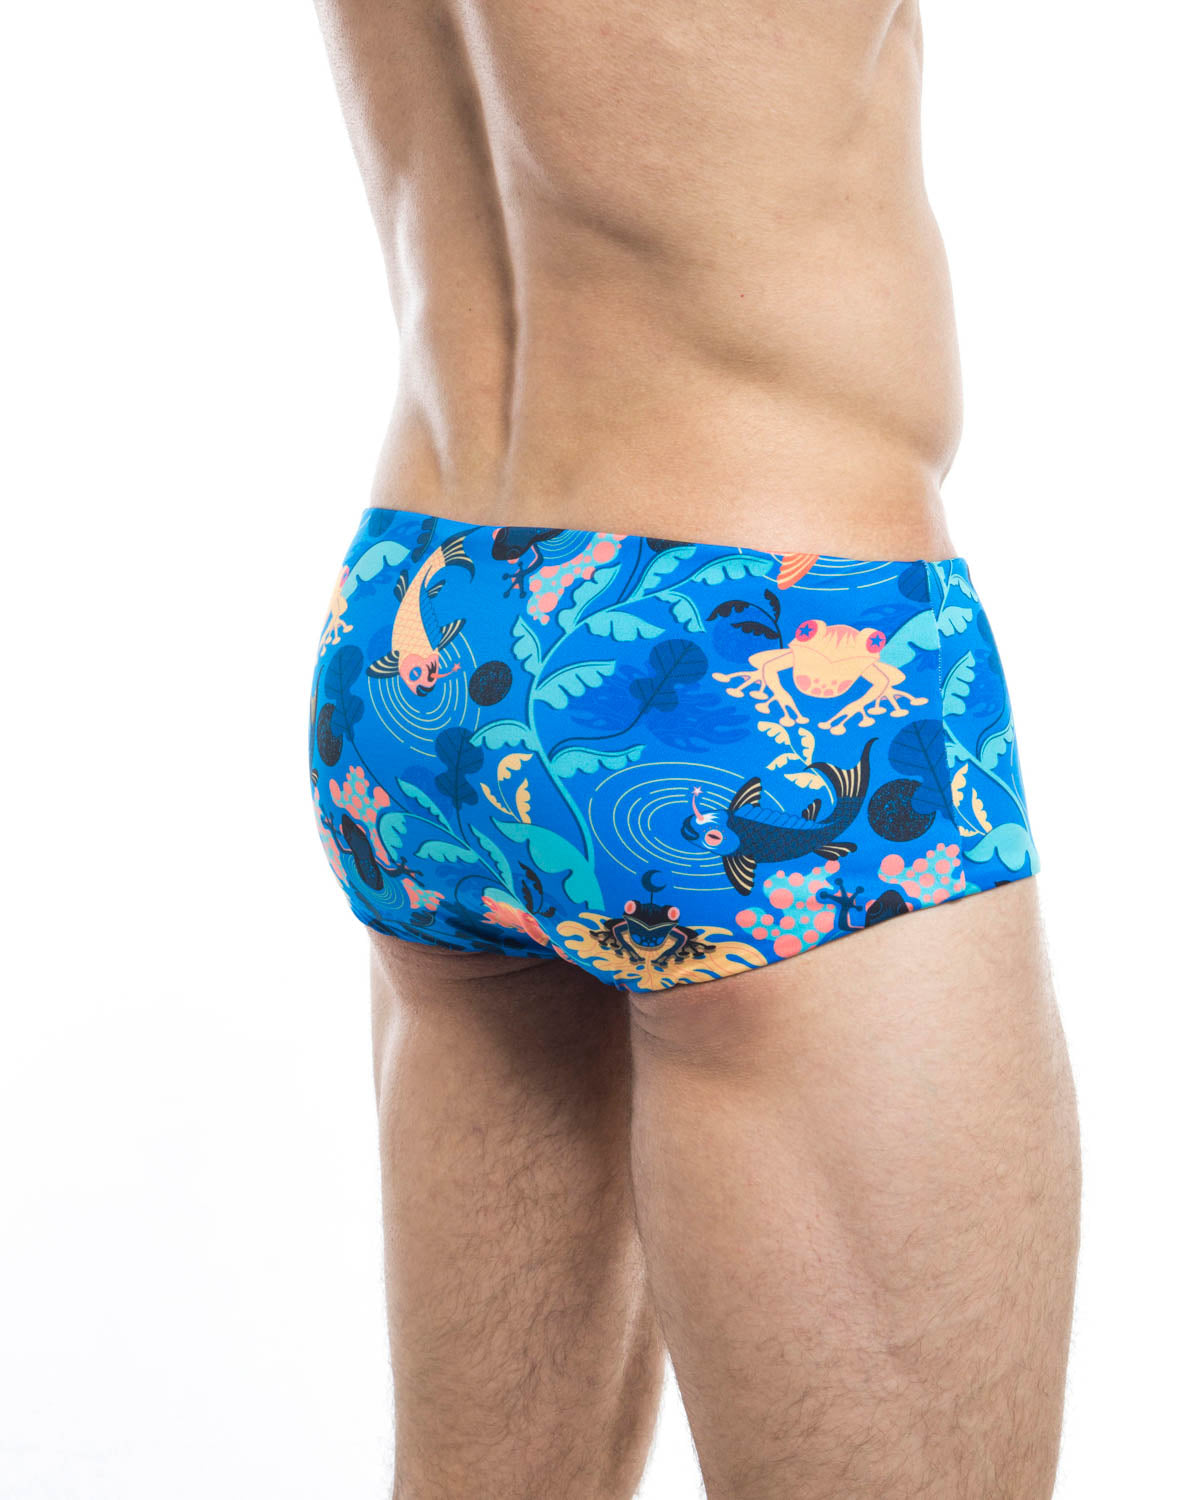 Men's swim trunks - HUNK2 Underwear Rampant Reversible Swim Trunks available at MensUnderwear.io - Image 1